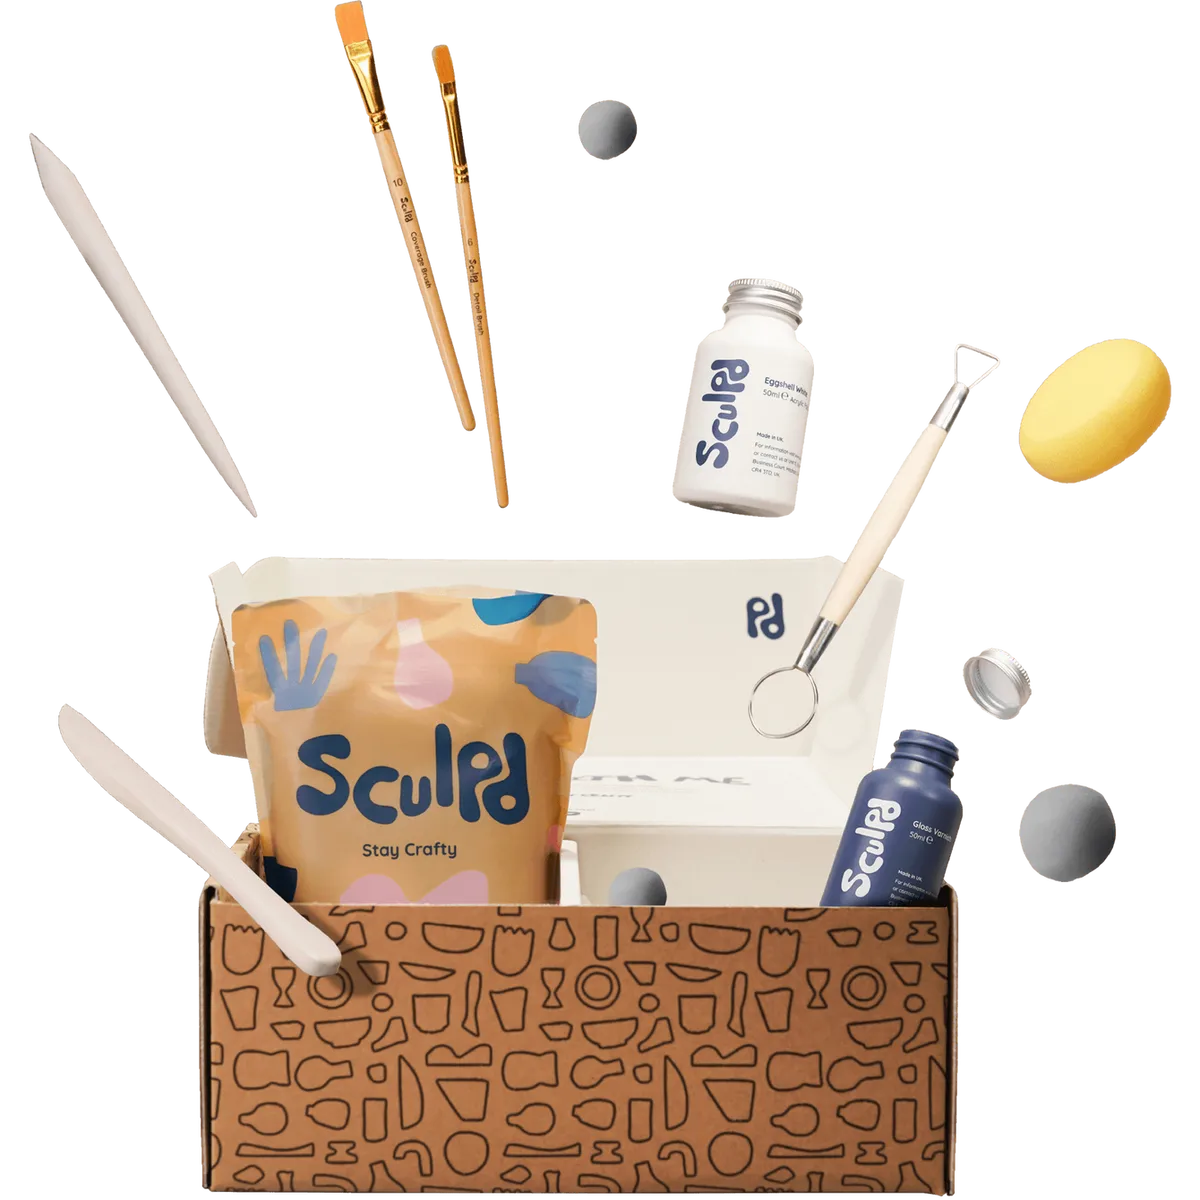 Sciulpd pottery kit